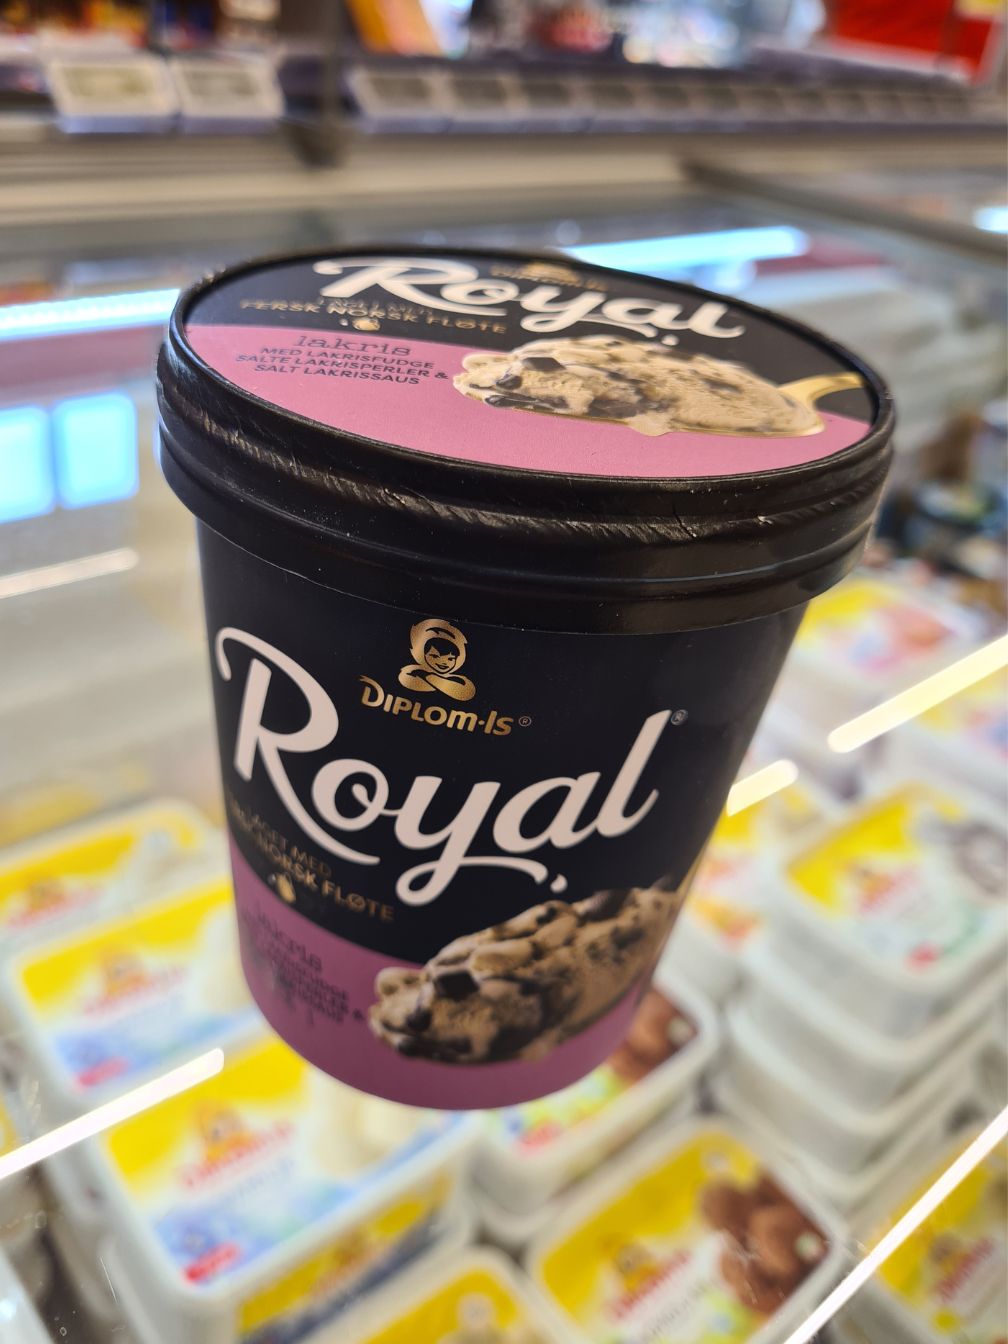 Diplom-is Royal lakris: Norwegian liquorice ice cream.